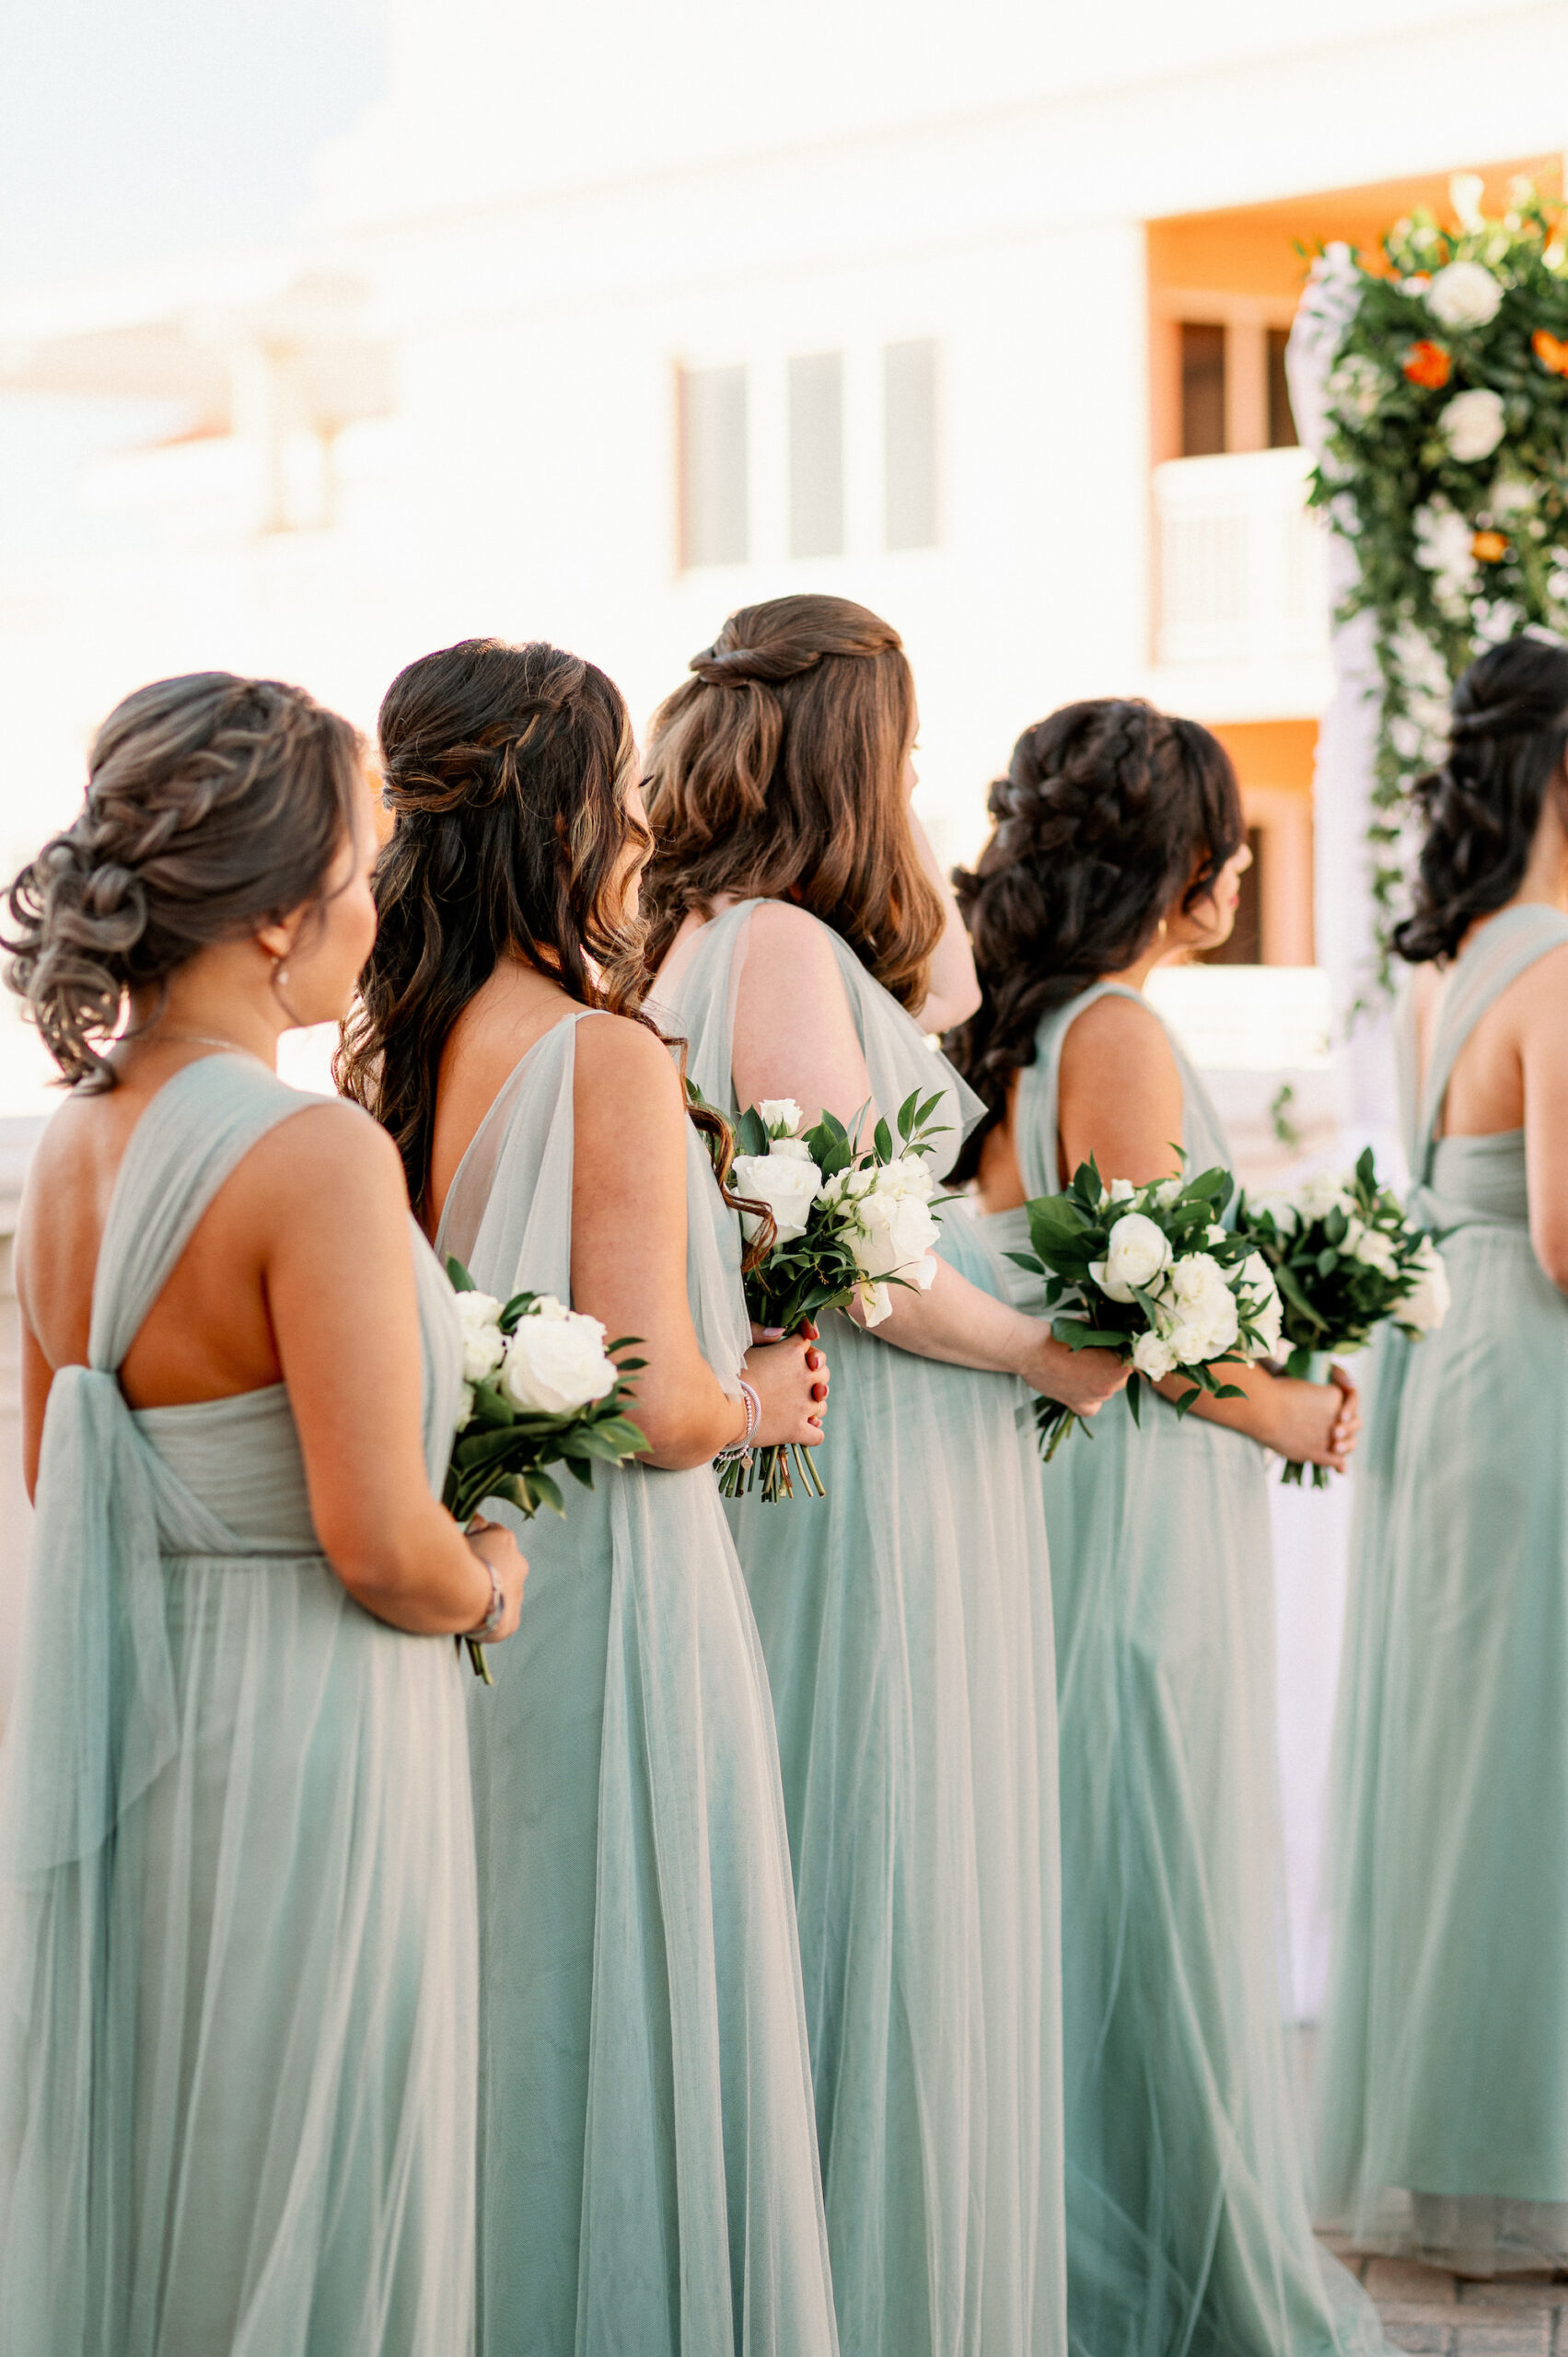 Bridesmaids in Teal Floor Length Bridesmaids Dresses Wedding Portrait | Tampa Photographer Dewitt for Love | Wedding Makeup Artist Femme Akoi